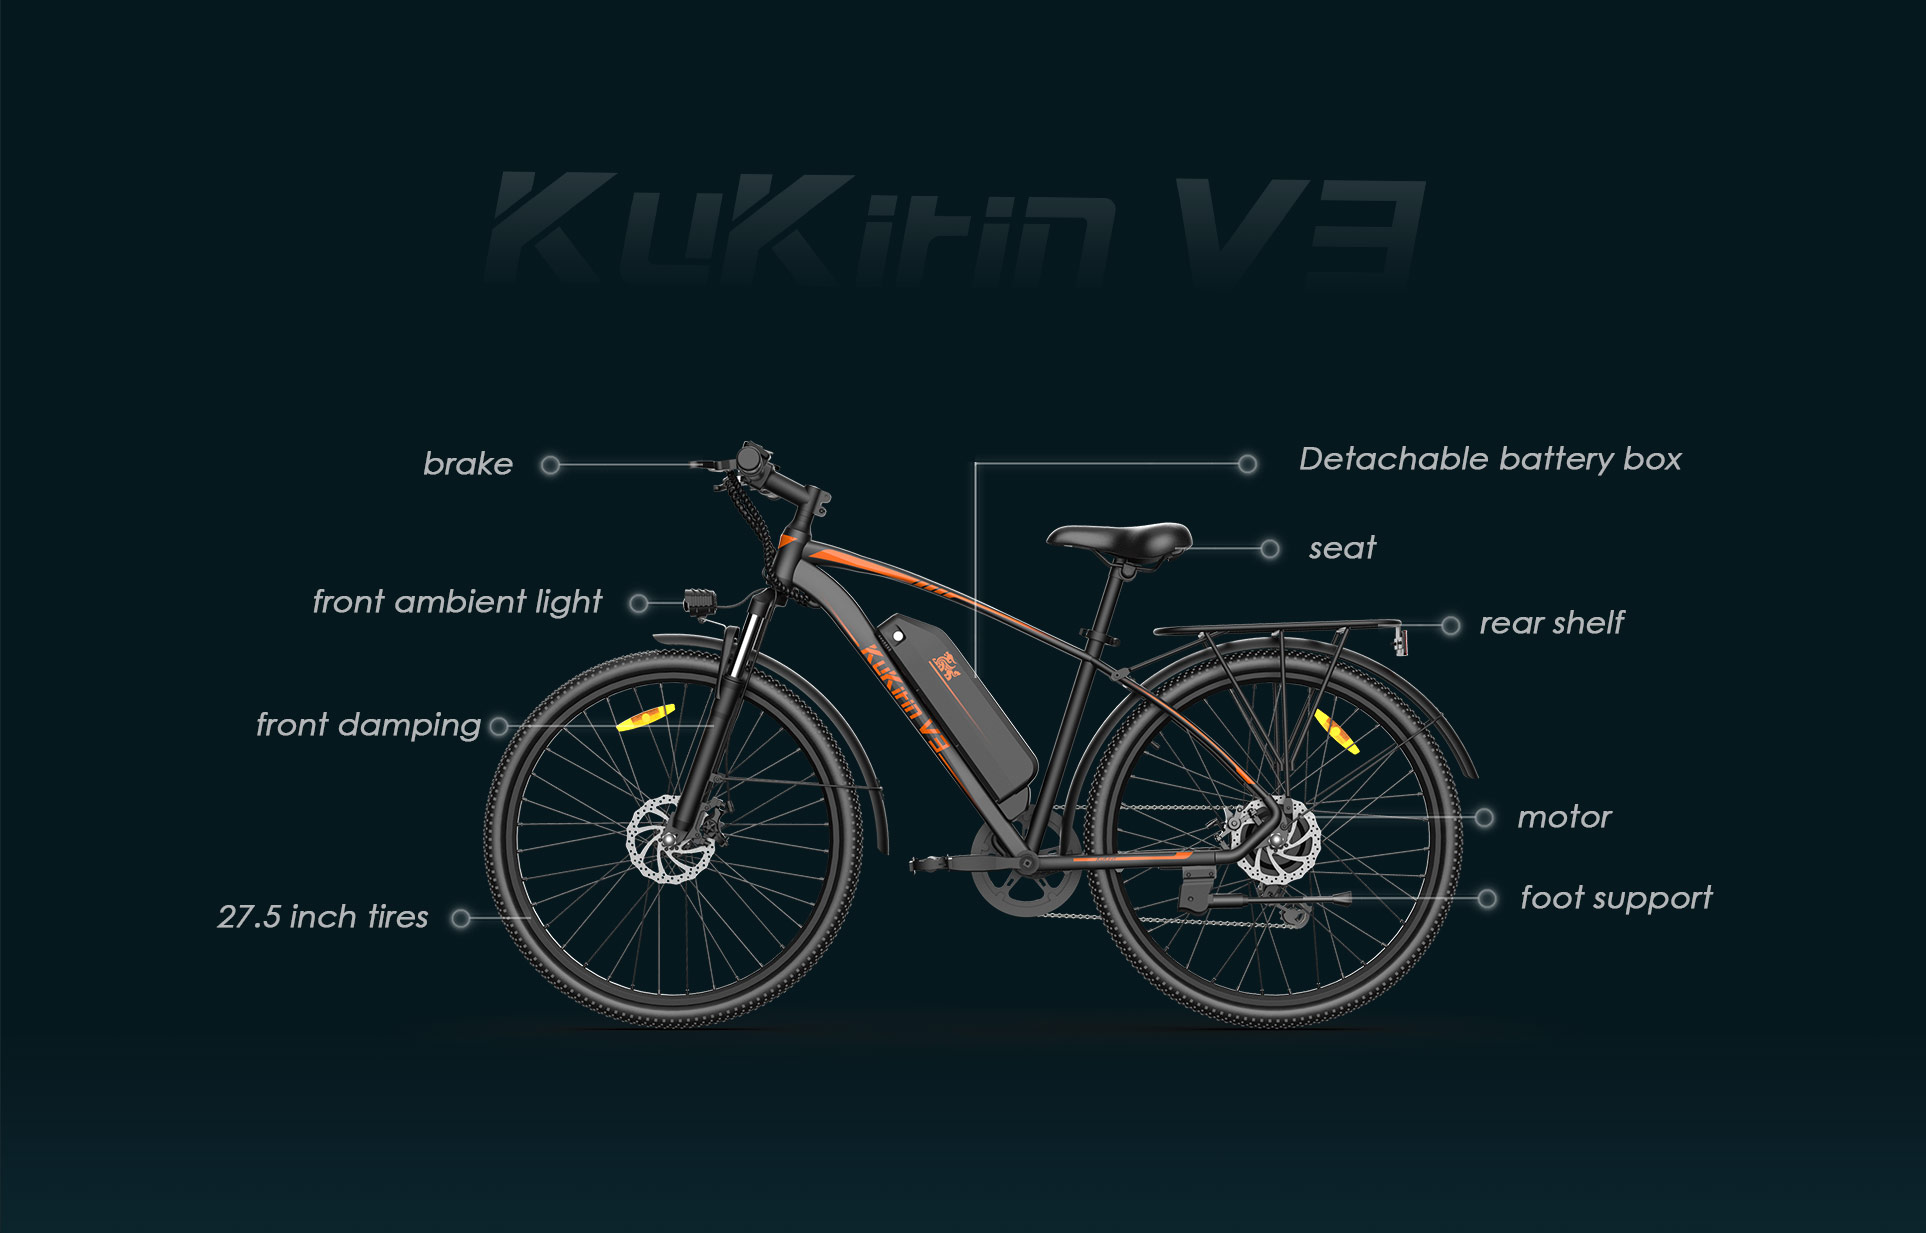 KuKirin V3 Elektrische Mountainbike, 27,5 banden, 15Ah verwijderbare accu, 90km maximale actieradius, 40km/u